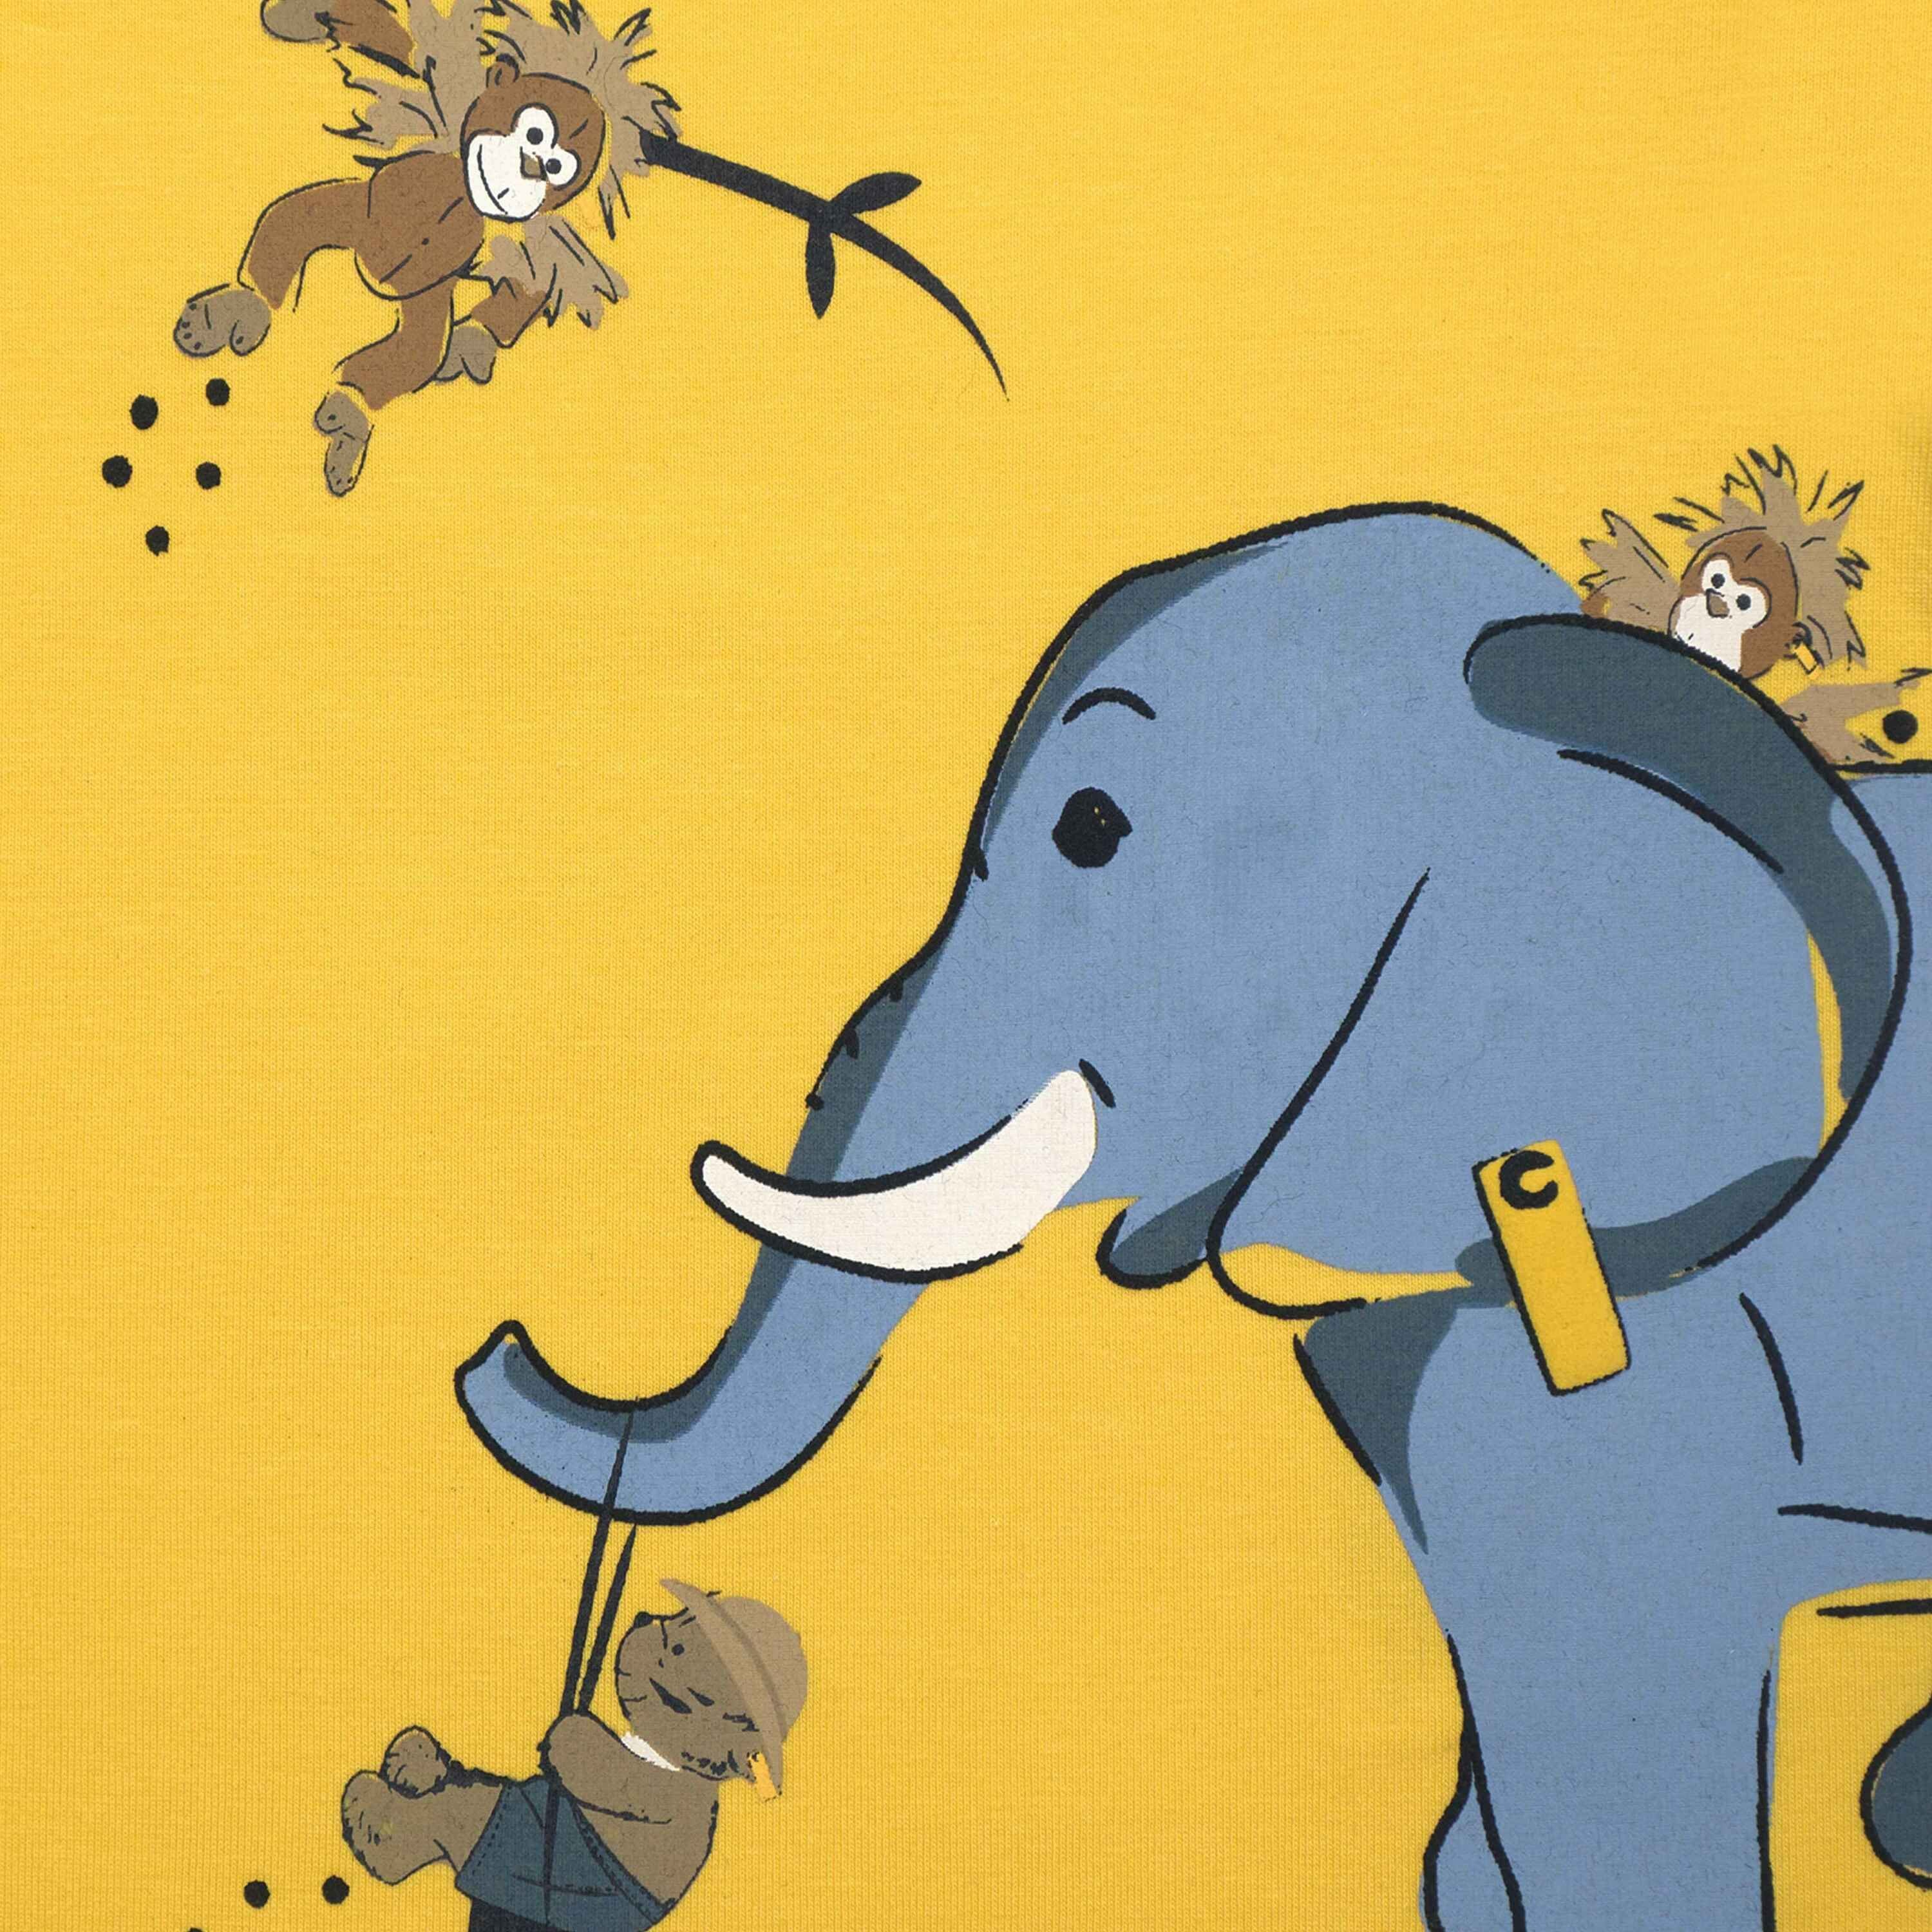 Elephant kurzarm mit T-Shirt Graffic MIMOSA Steiff Ride T-Shirt